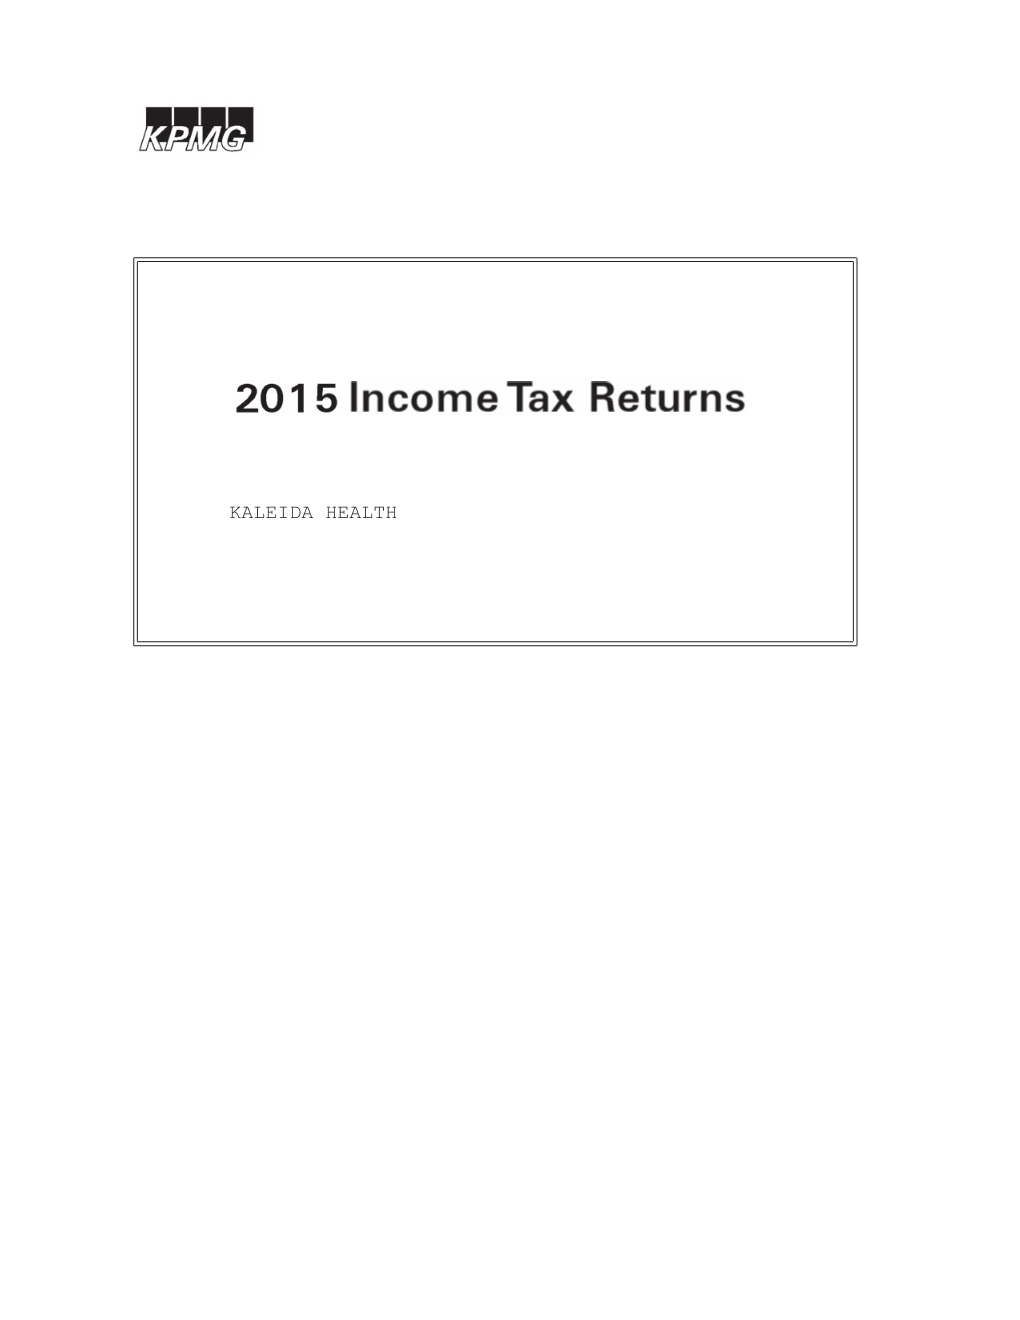 Tax Year 2015